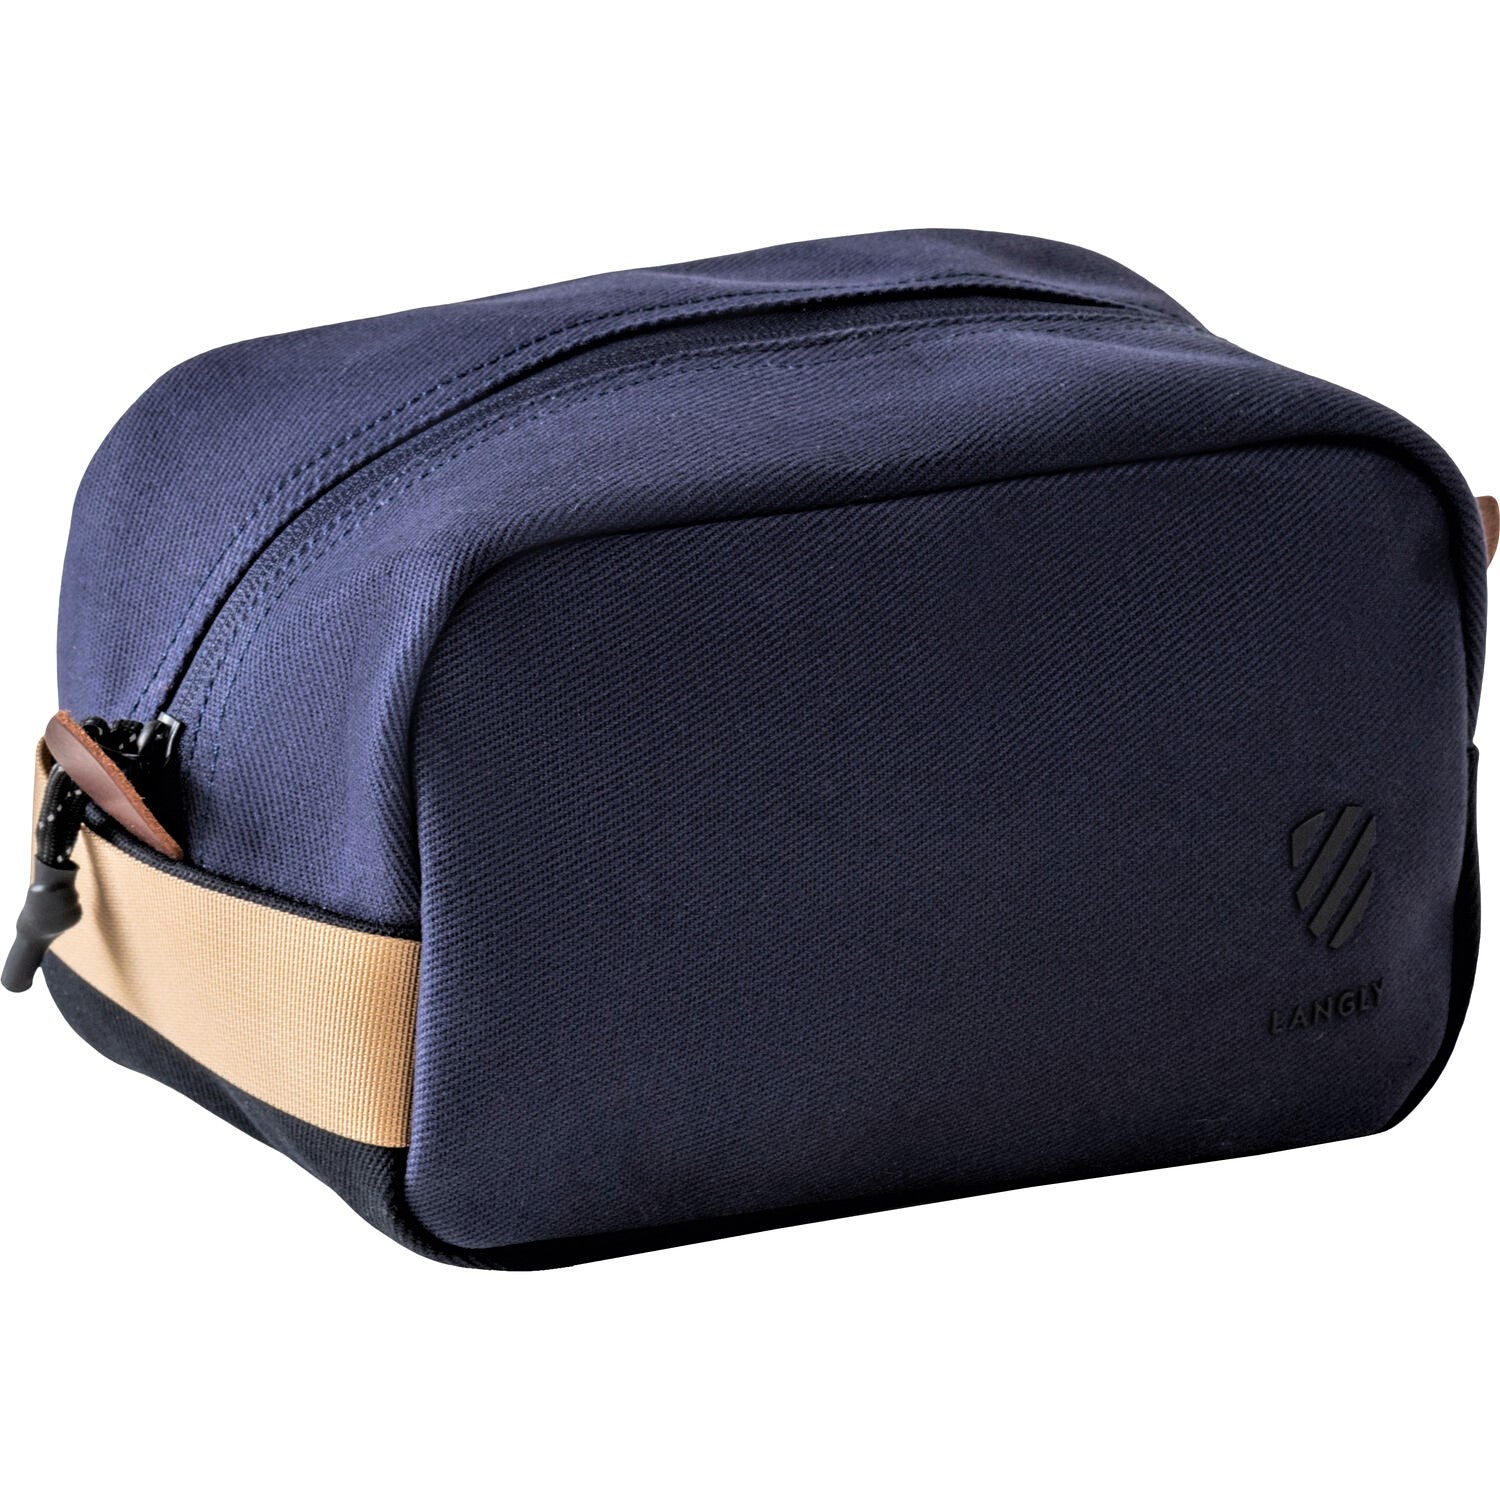 Langly Weekender Kit Bag (Navy)